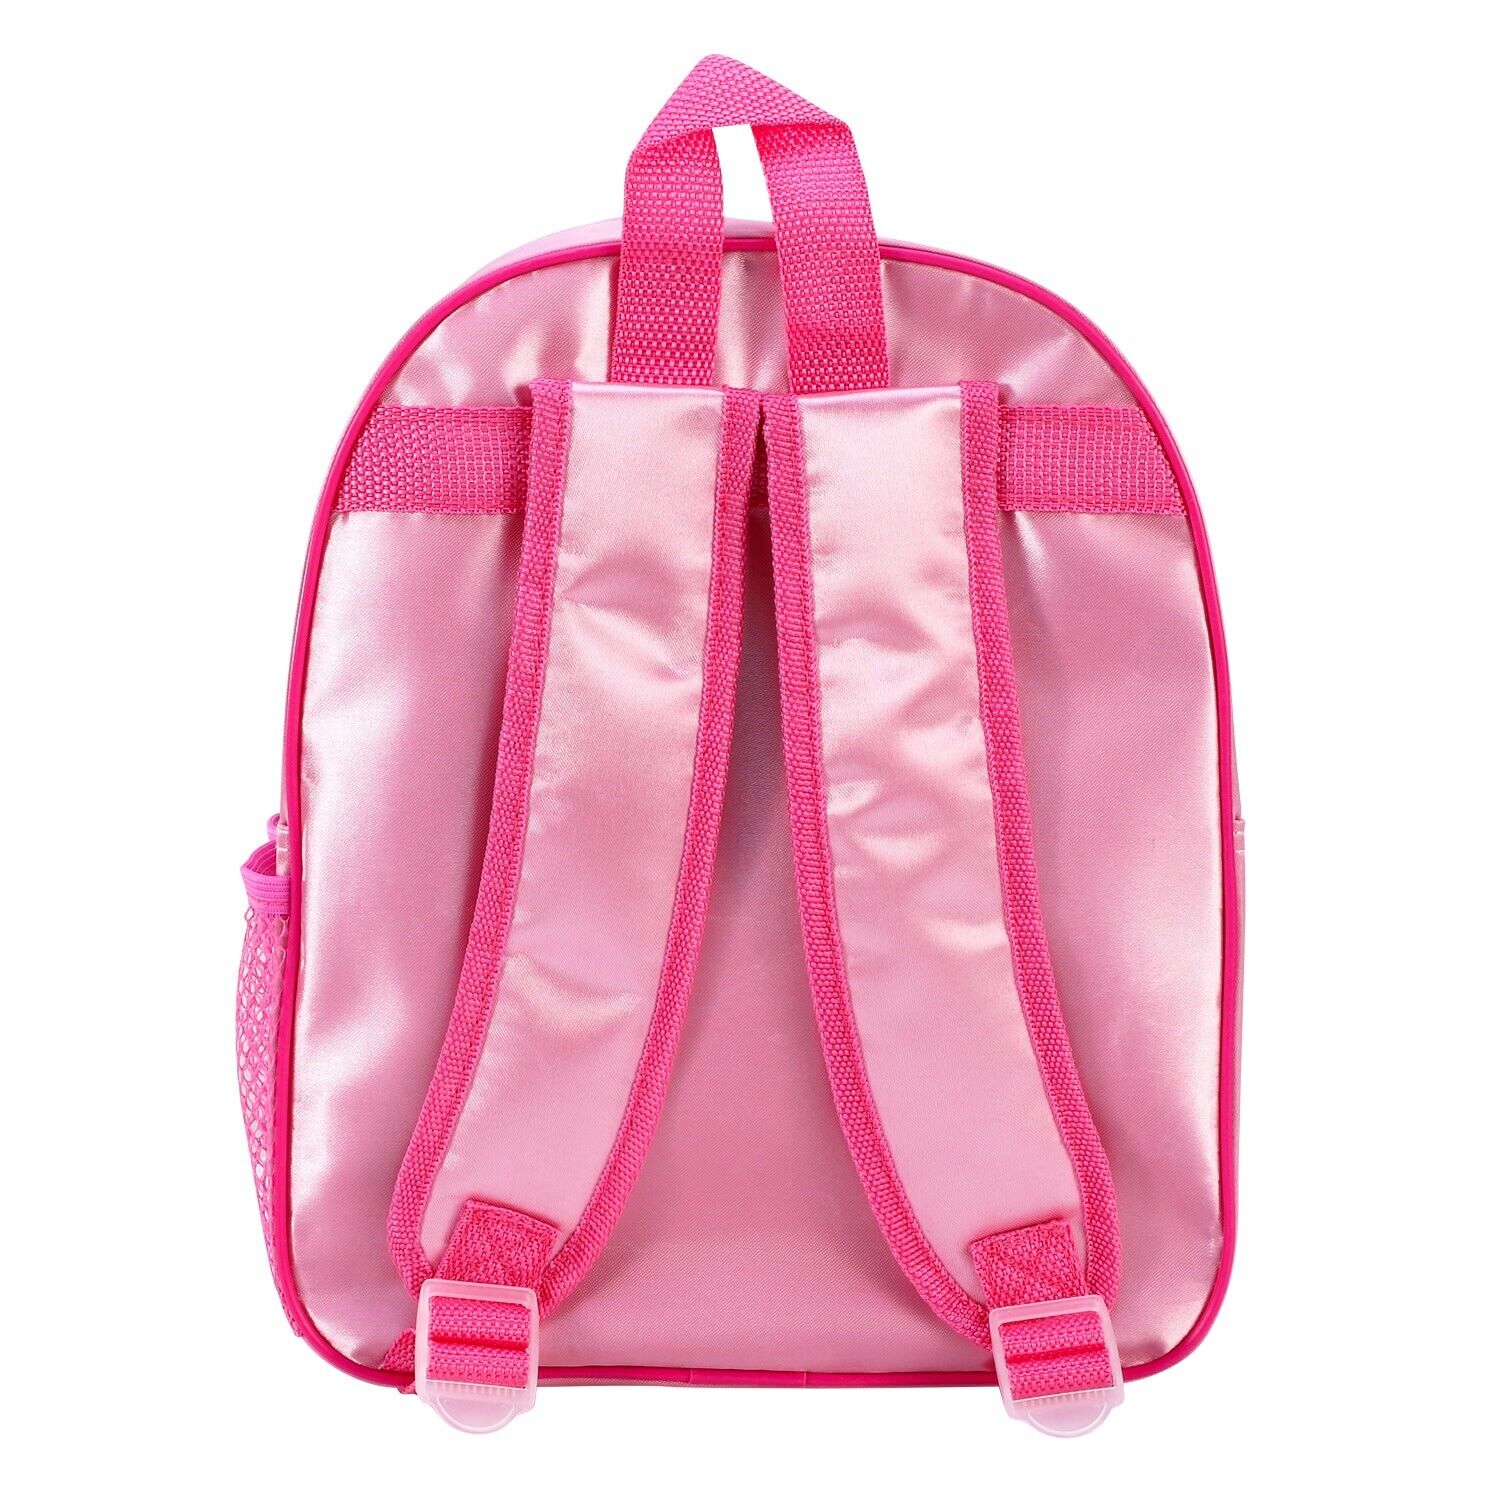 Wholesale Minnie Mouse shoulder bags for children SKU: DMM-8137-2 | Textiel  Trade